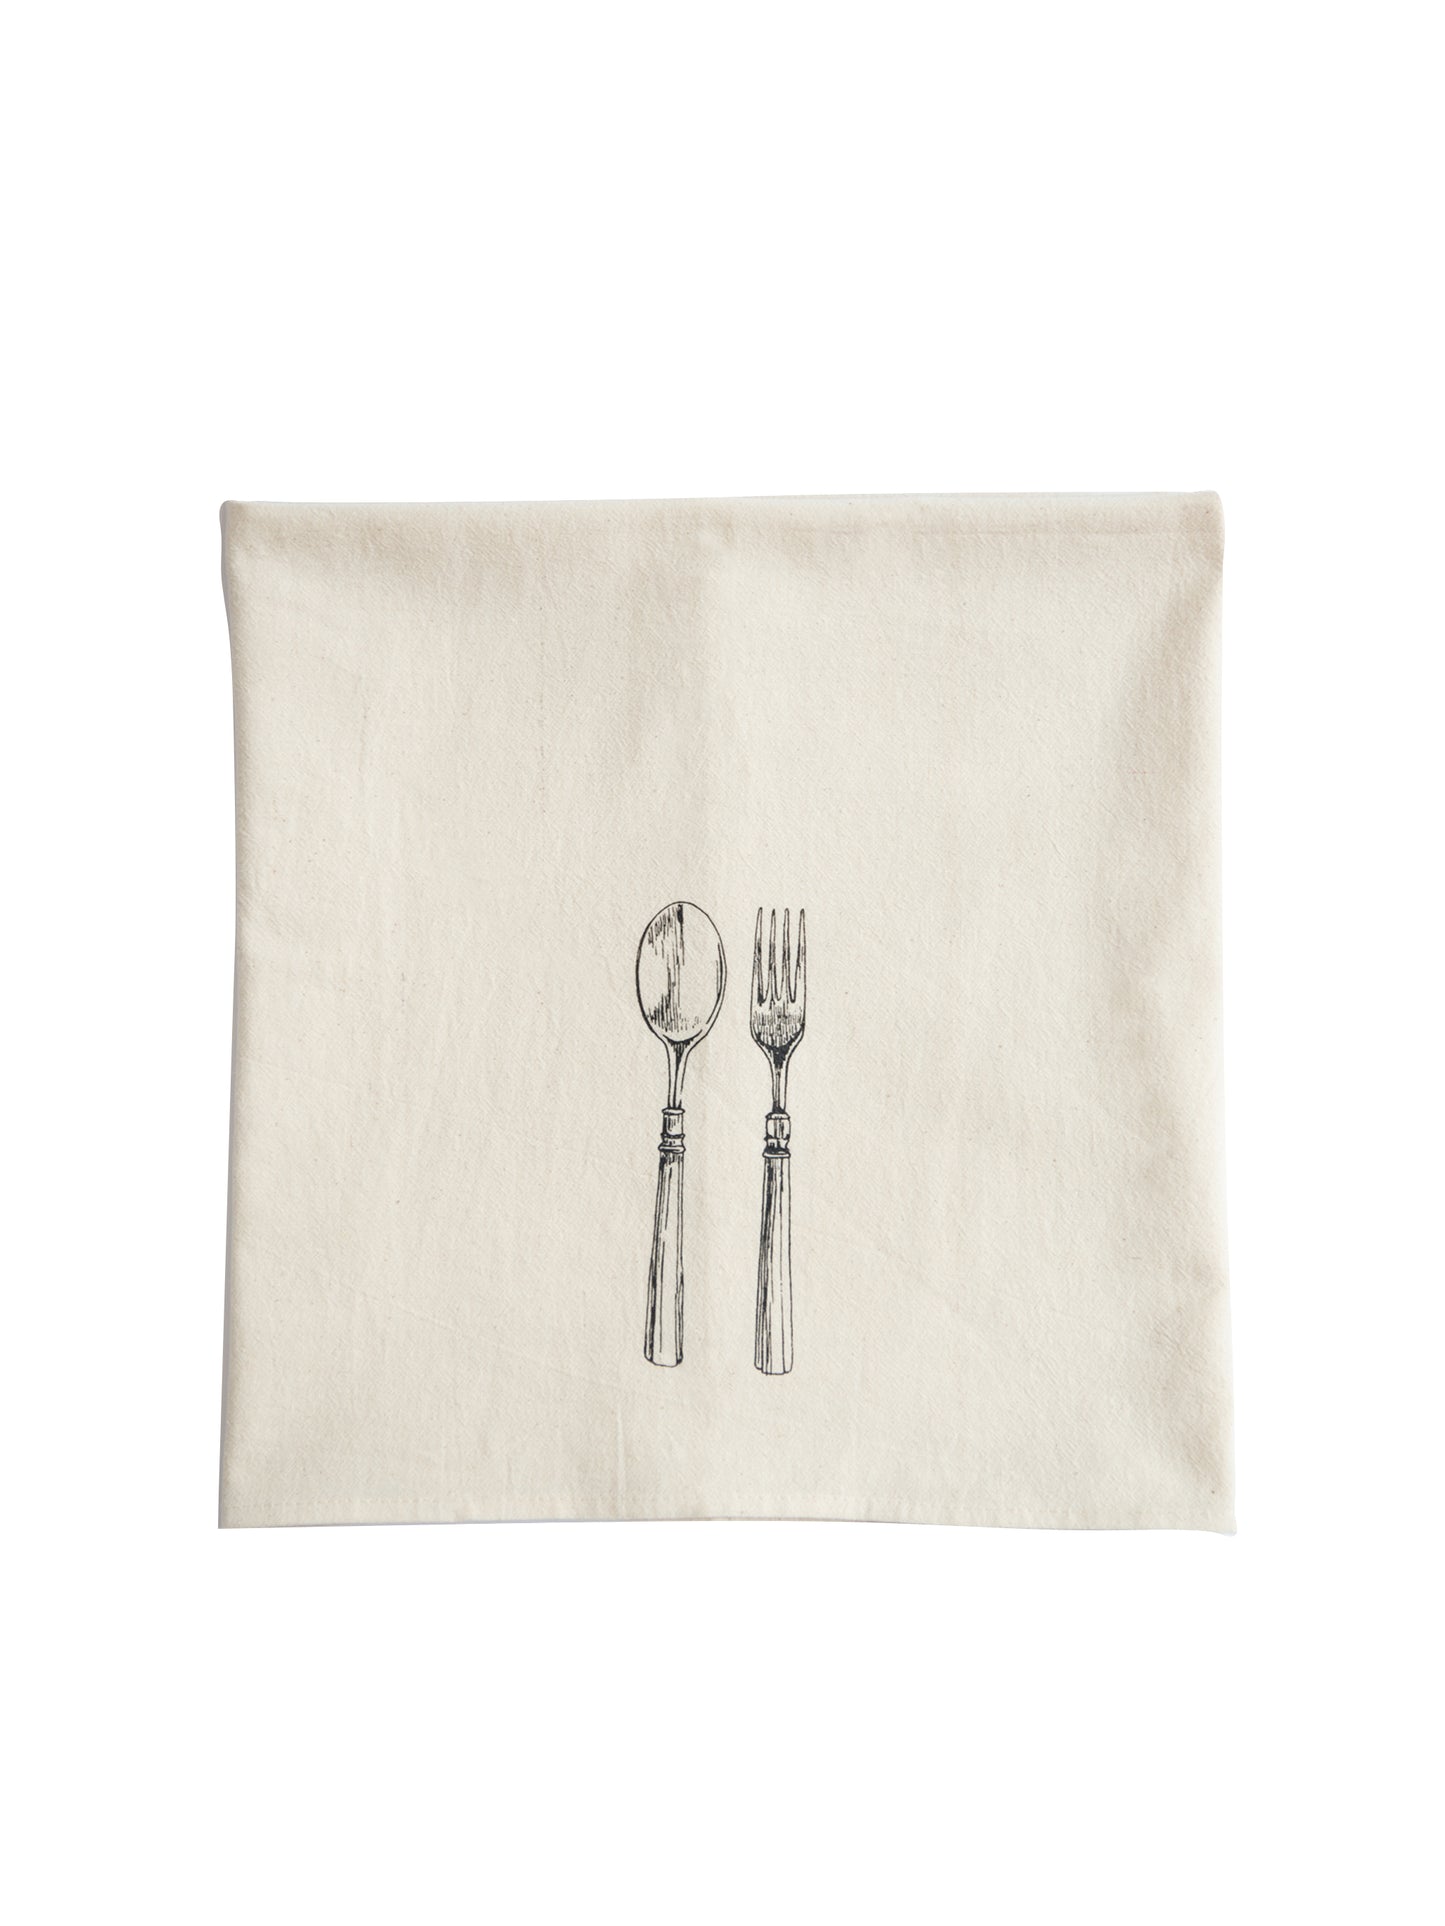 WT Fork and Spoon Flour Sack Towel Weston Table